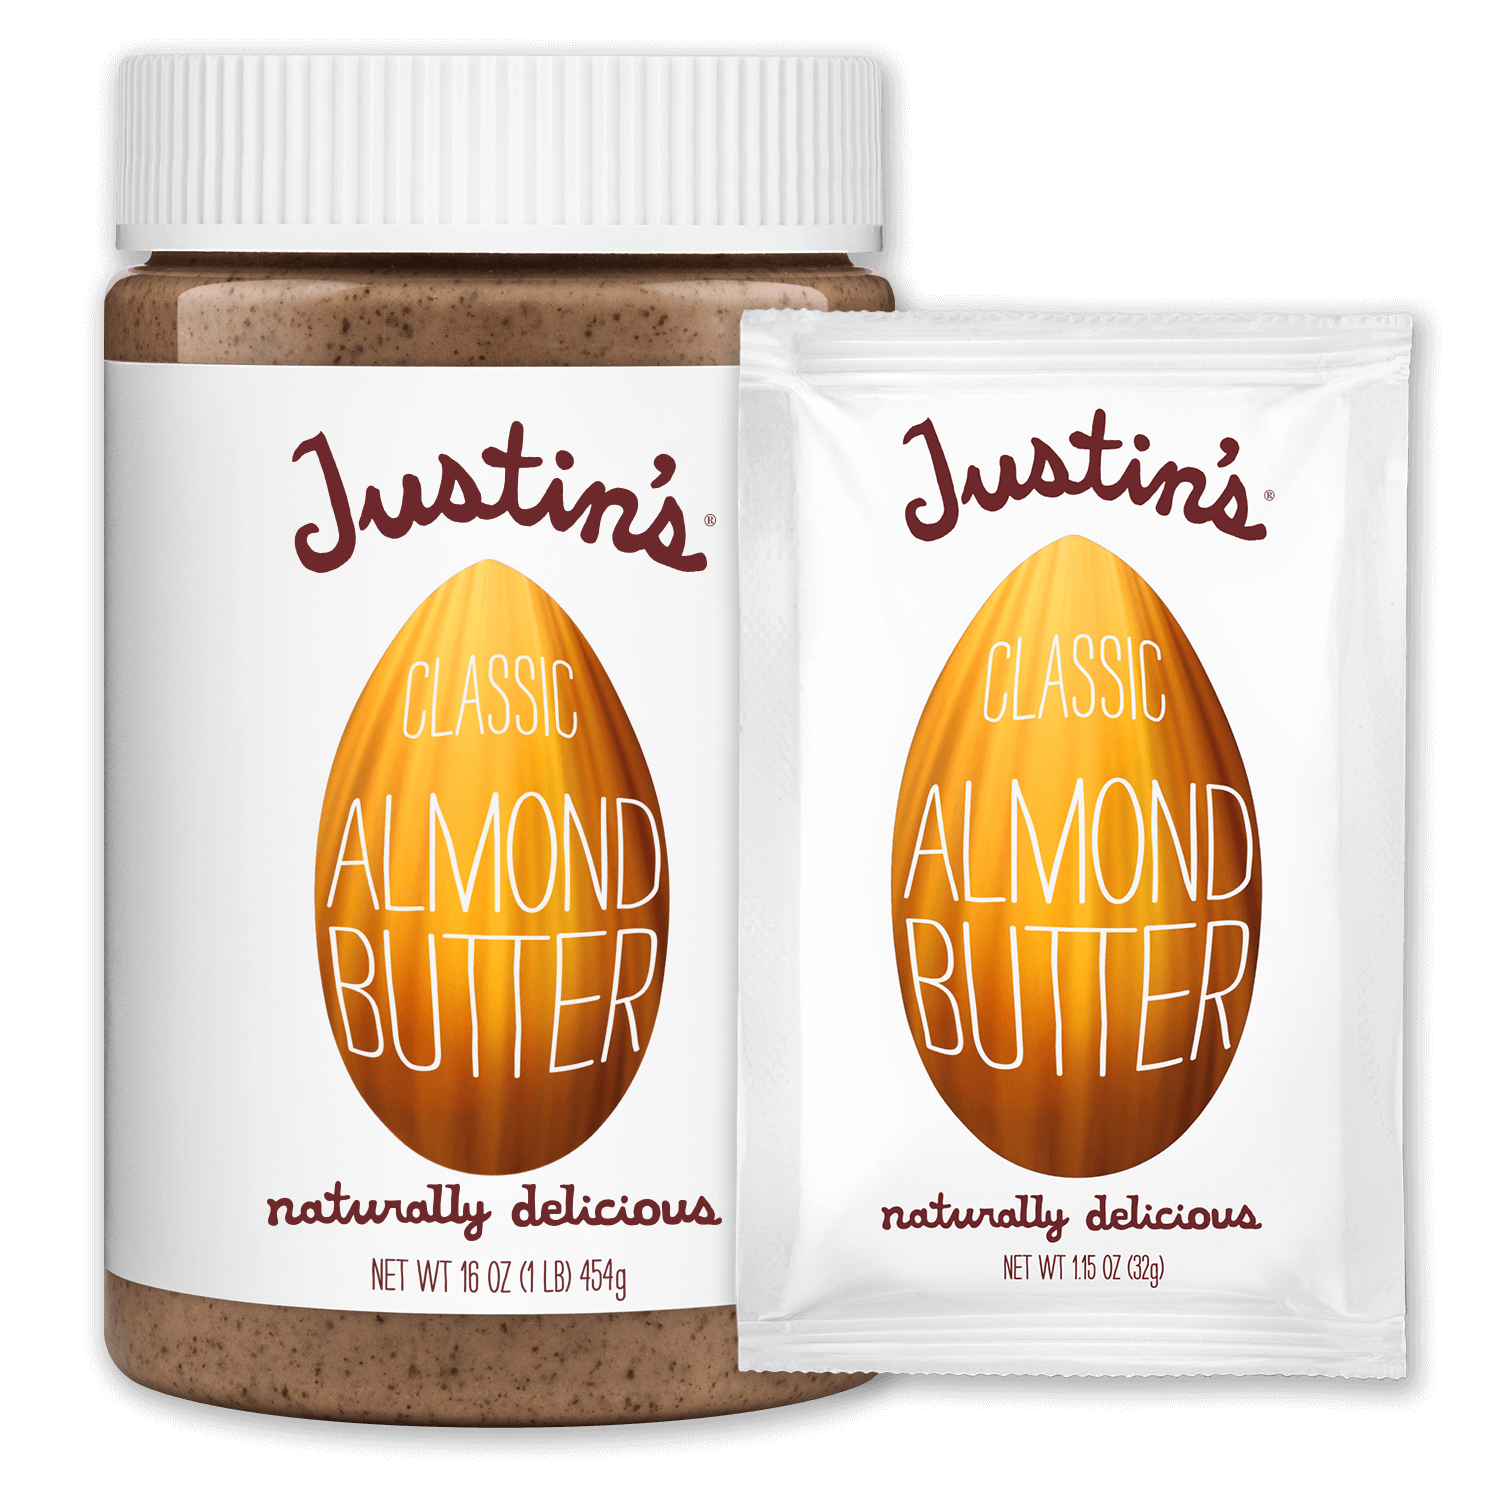 Justin's Classic Almond Butter Spread jar 16 oz. beside Justin's Classic Almond Butter Spread Squeeze Pack 1.15 oz.